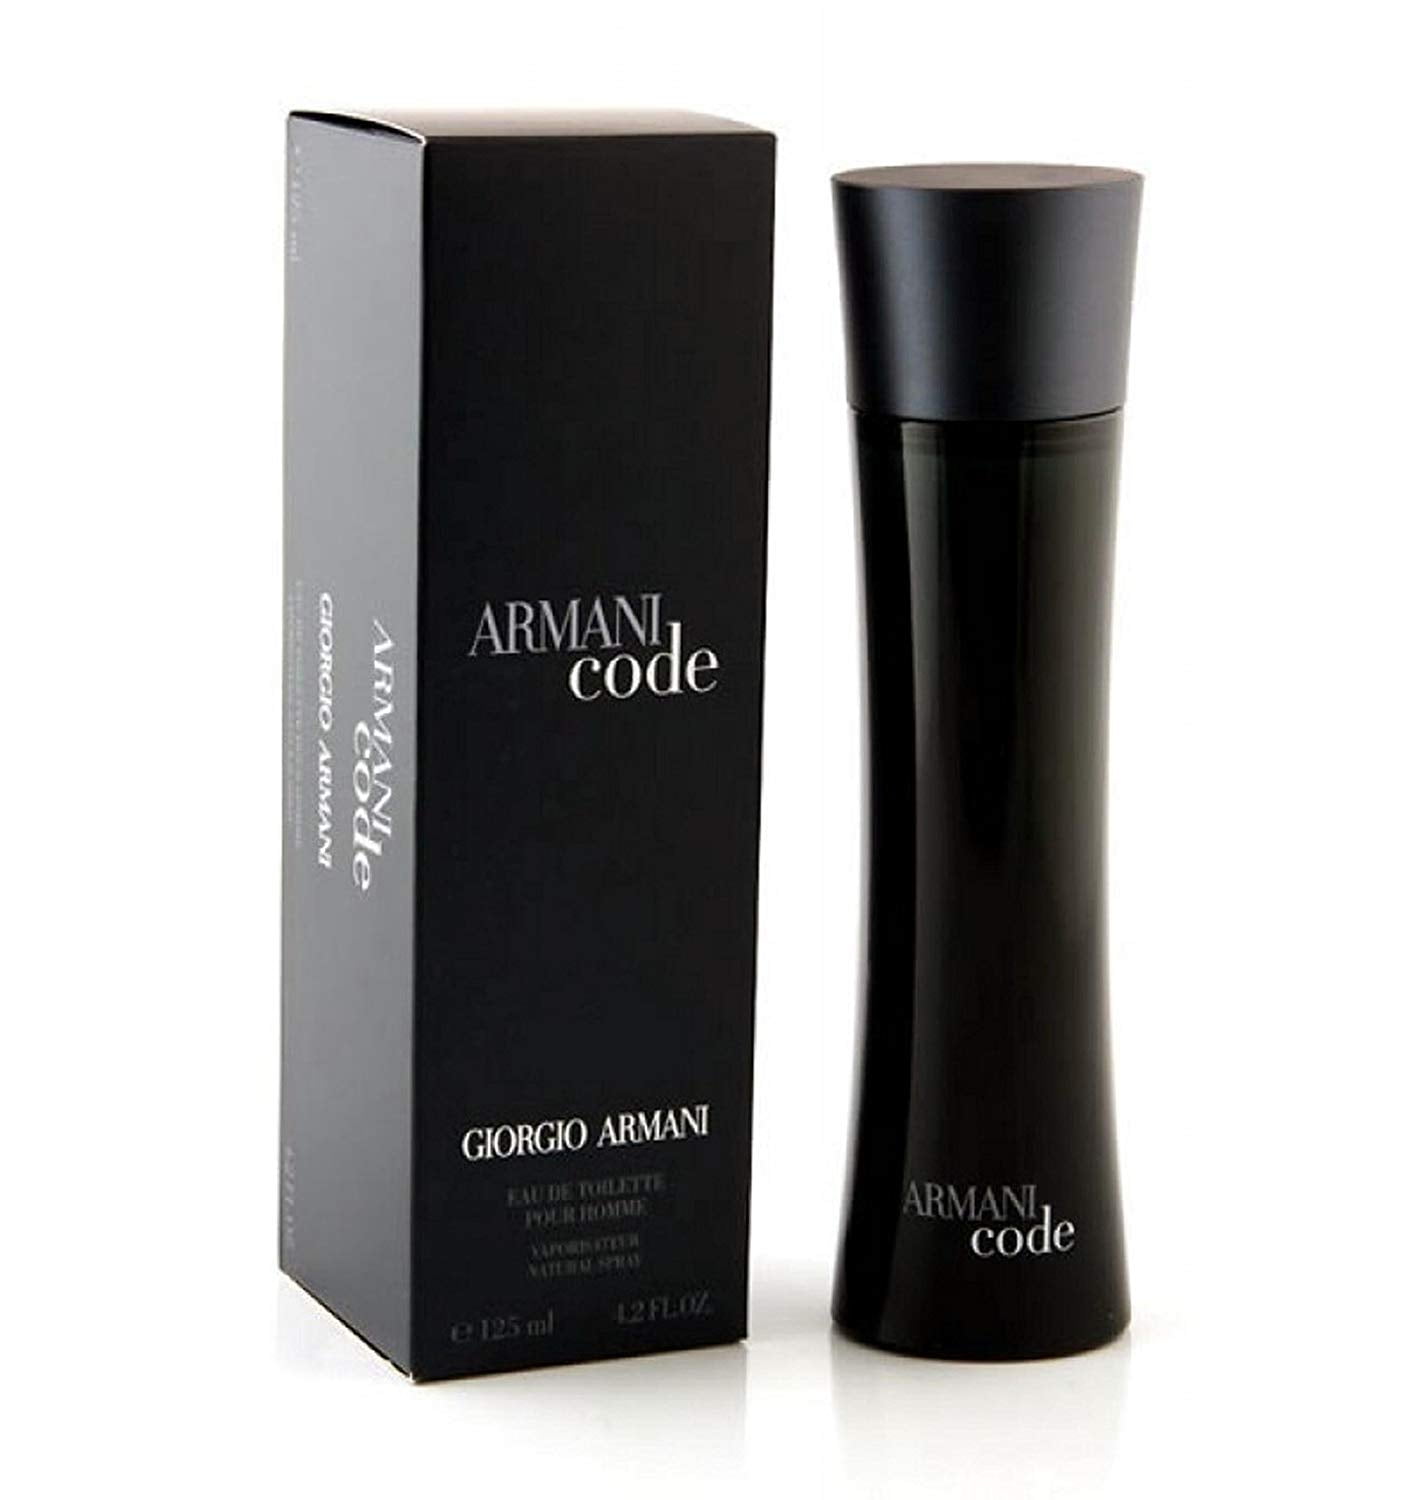 Армани черный мужской. Black code (Giorgio Armani) 100мл. Armani code Eau de Parfum Giorgio Armani. Armani Black code мужской. Armani code Eau de Parfum Giorgio Armani for men.